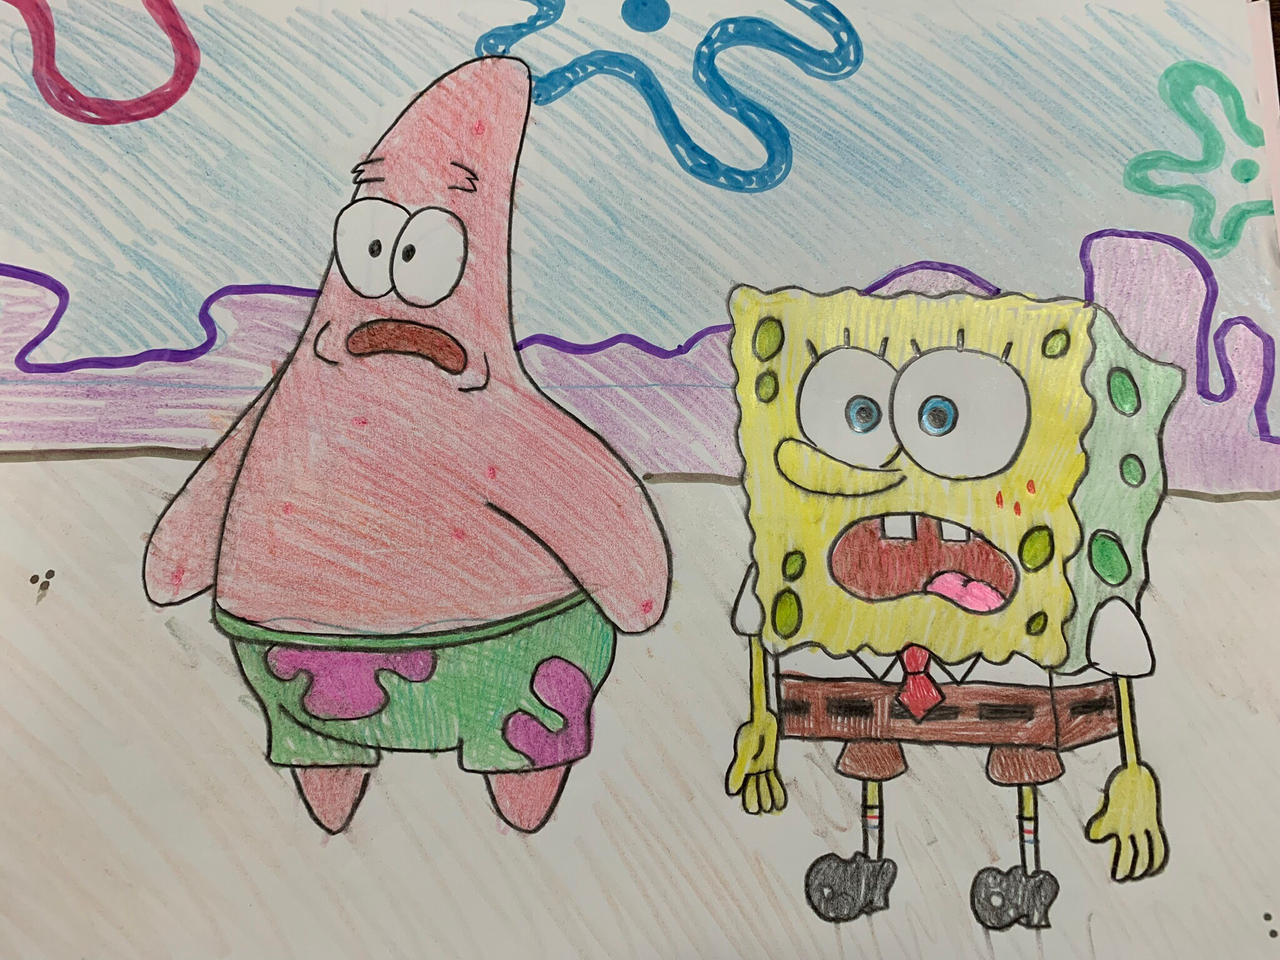 Spongebob squarepants and Patrick star shocked by joeysclues on DeviantArt